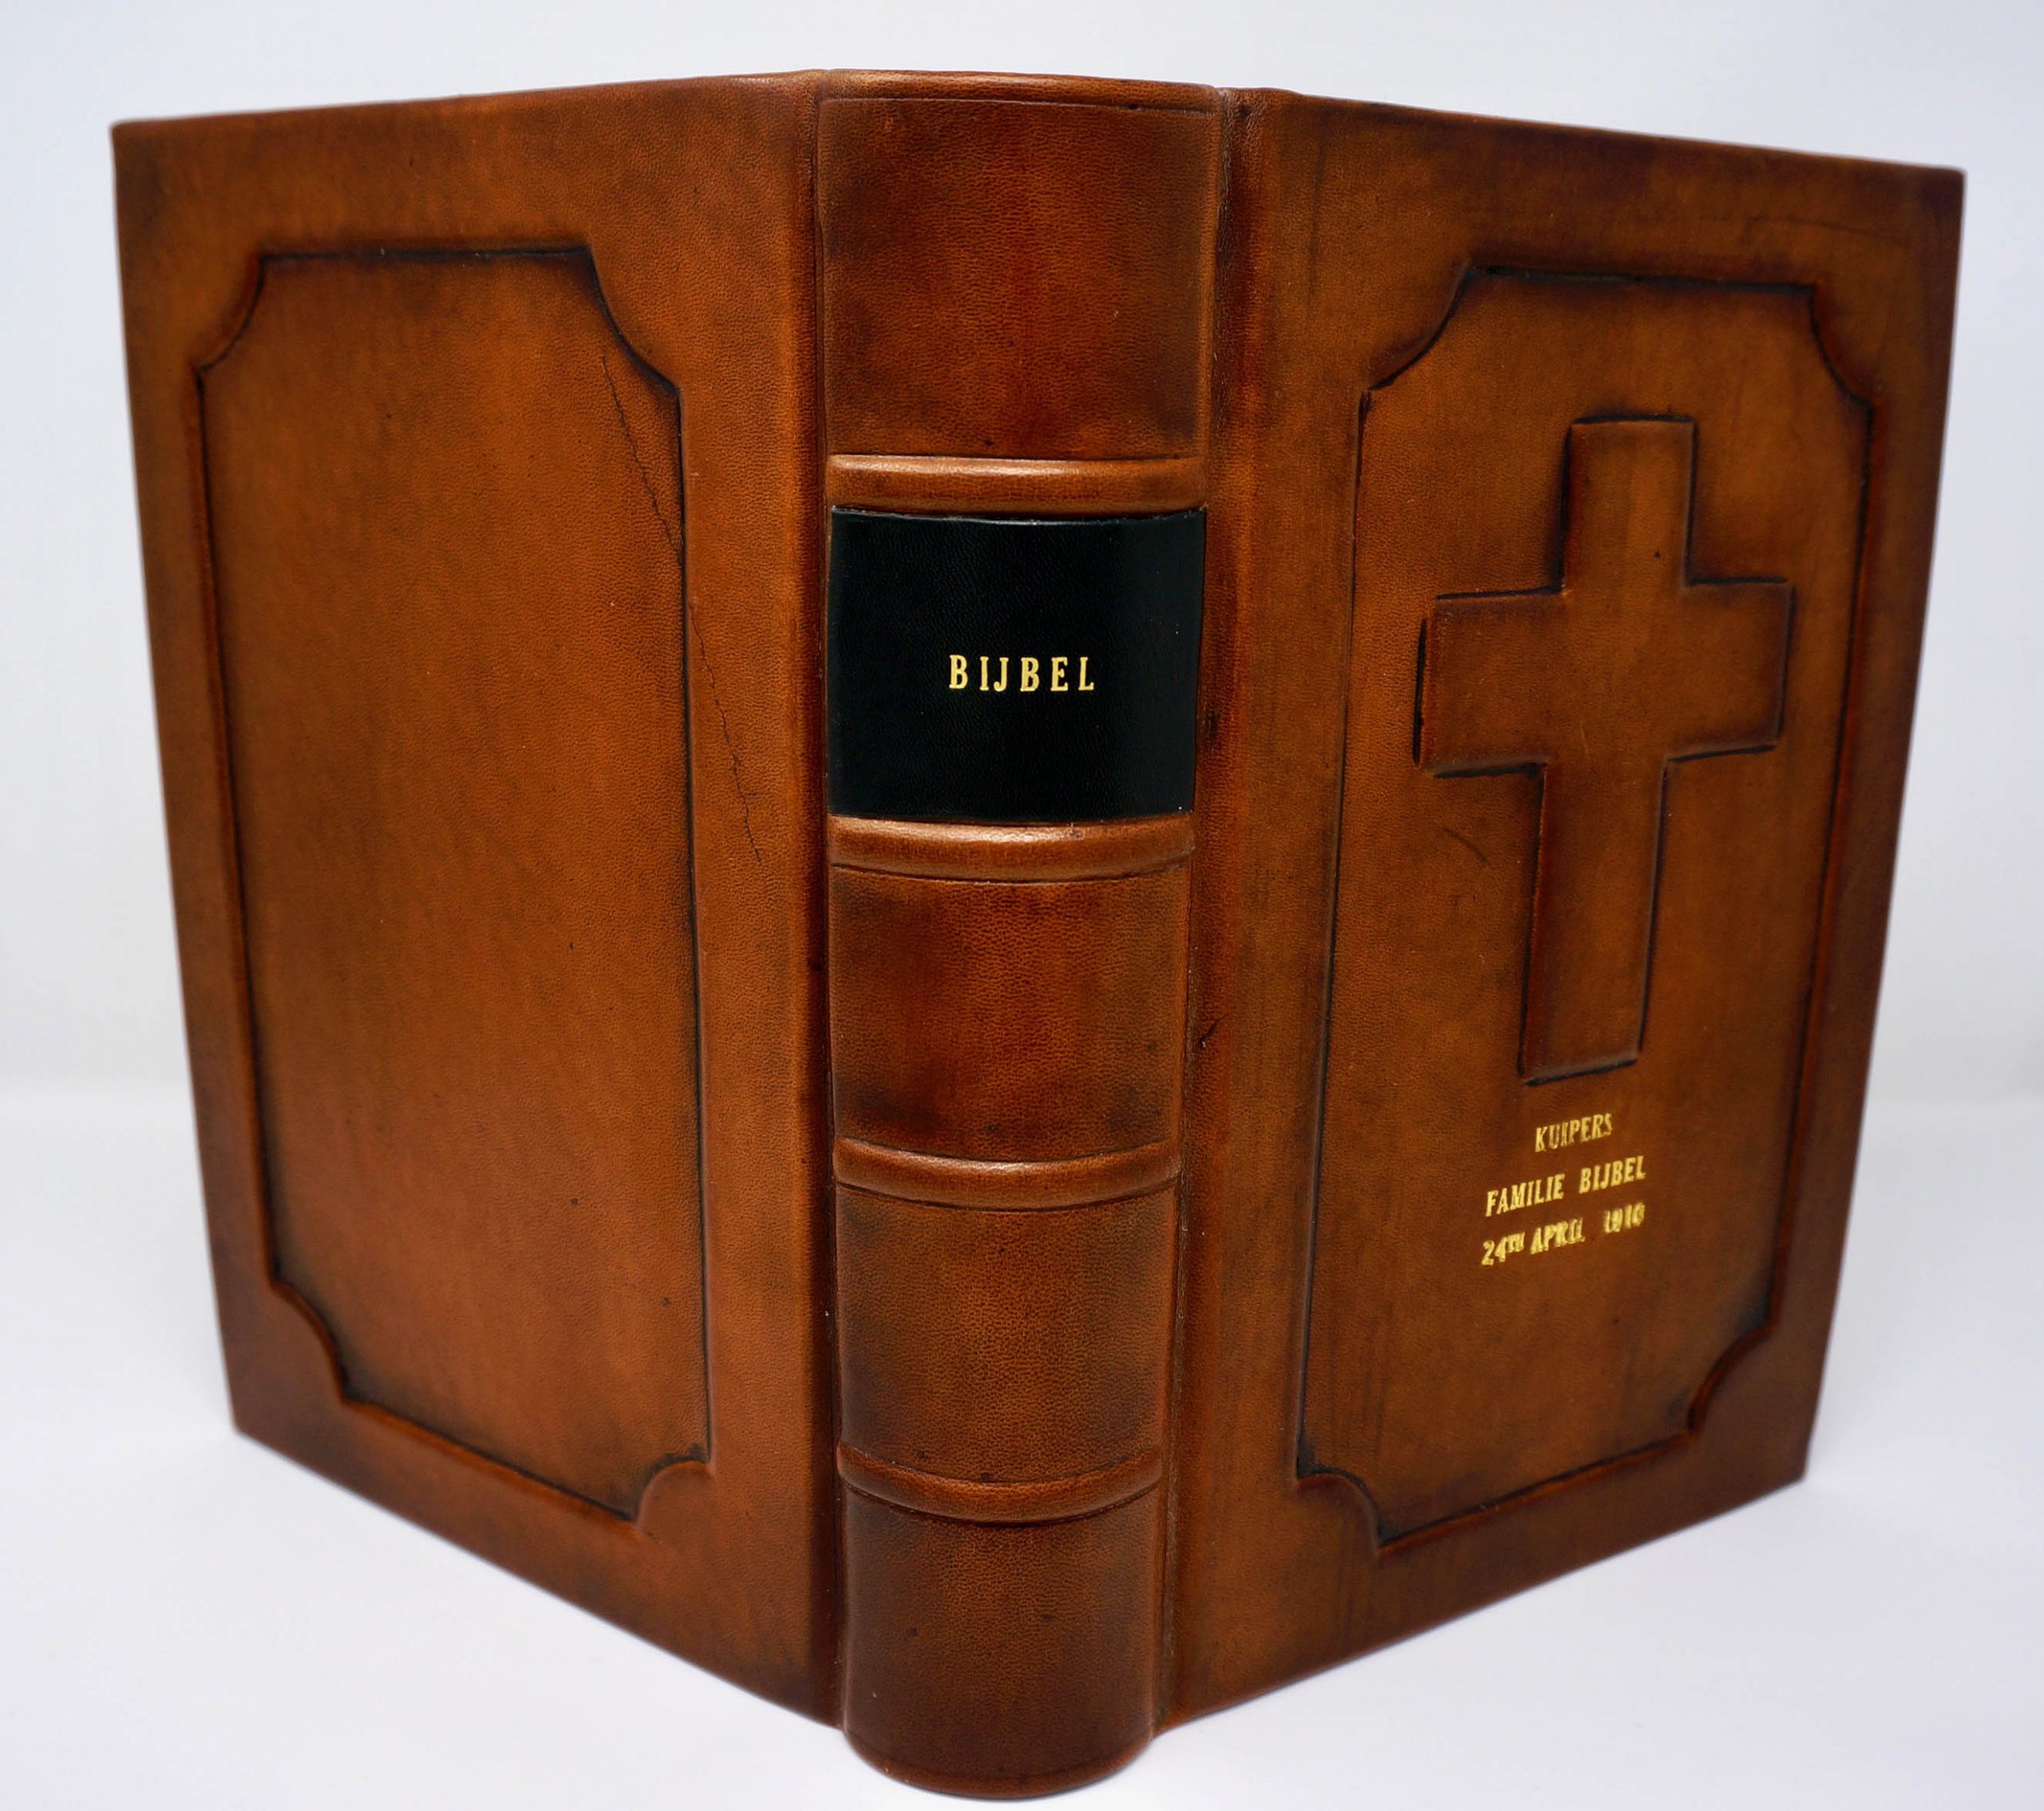 Bijbel Restoration
Custom Leather Bound Book
Boston Harbor Bookbindery
https://bostonharborbooks.com/